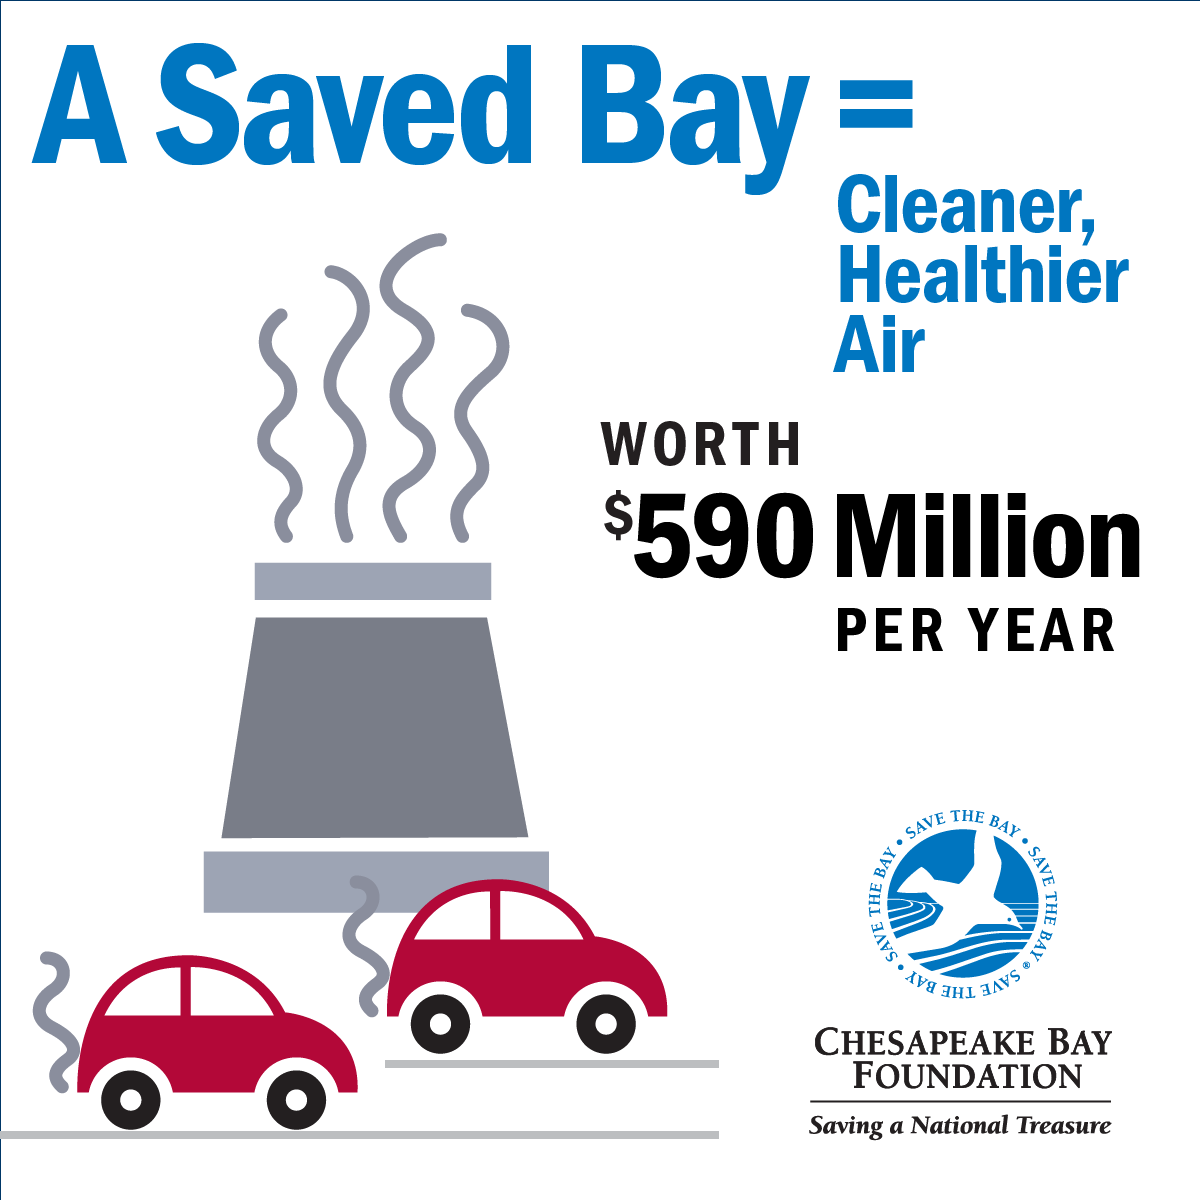 A Saved Bay = Cleaner, Healthier Air worth $590 MIllion per year